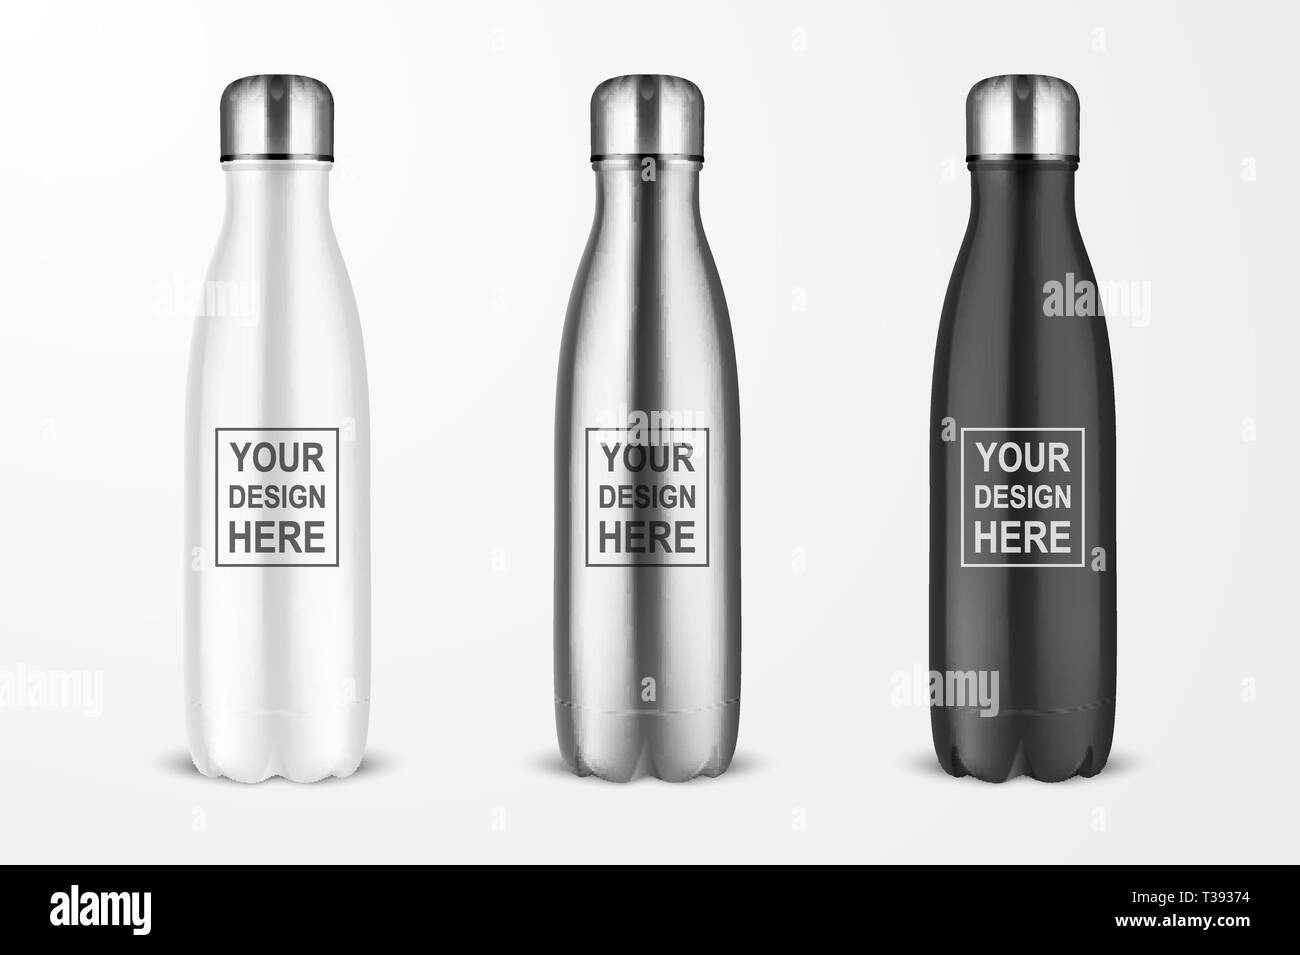 Plastic Water Bottles Realistic Set, Vectors